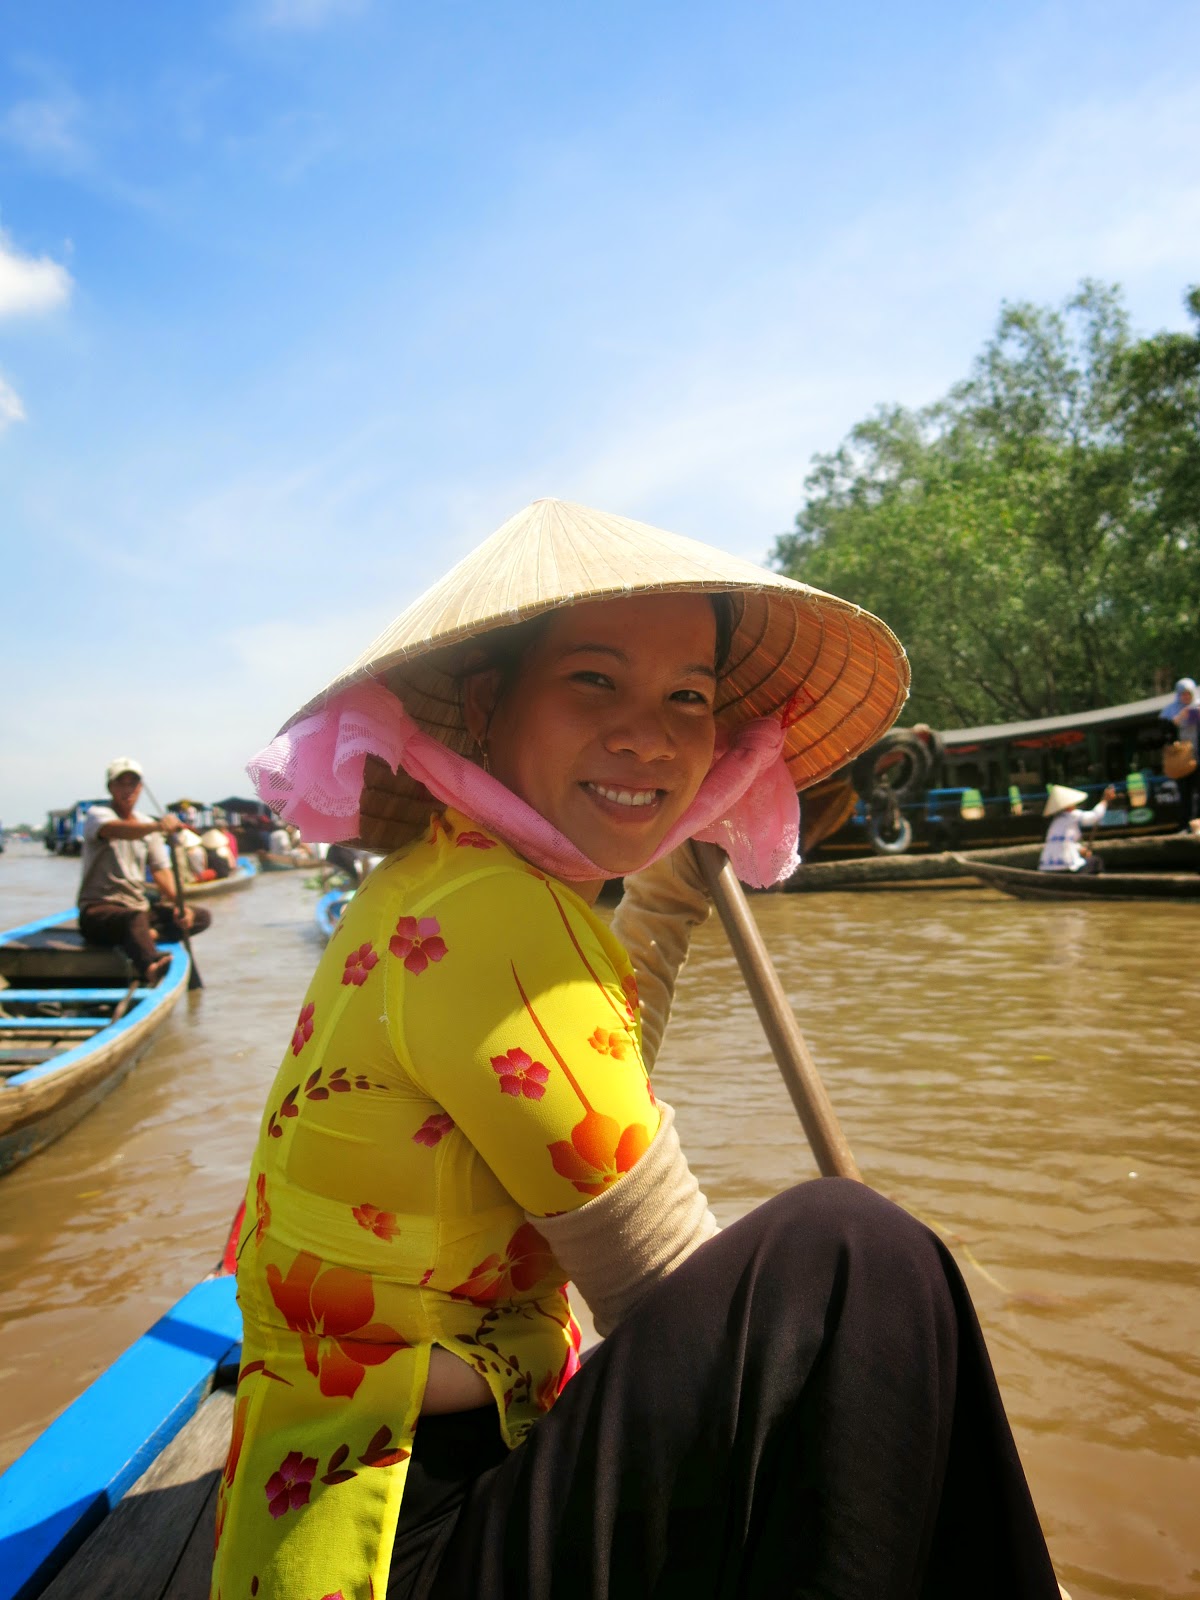 Mekong-deltat, vietnam